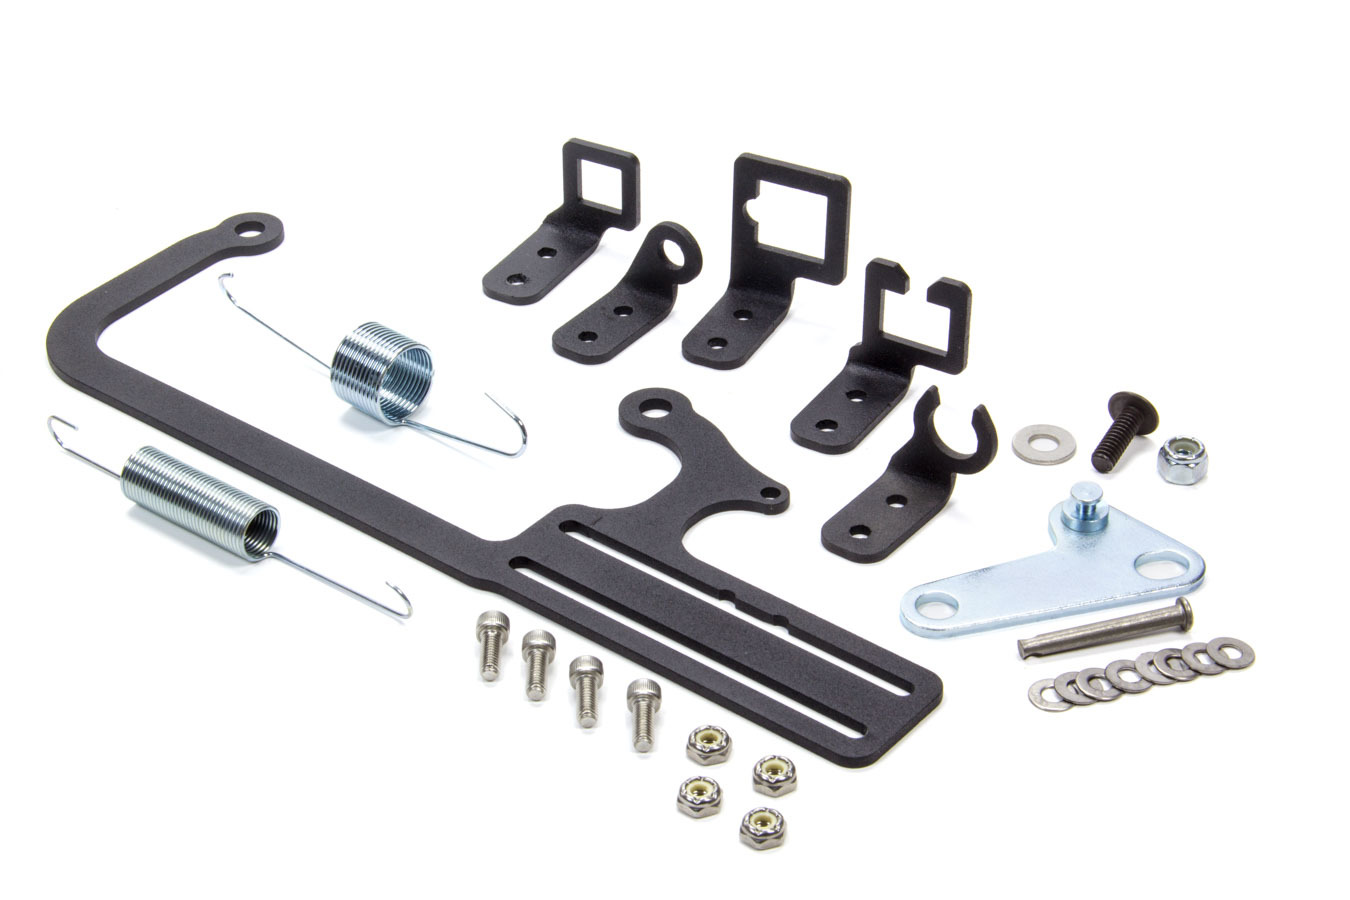 FAST 304147 Throttle Cable Mount Kit, EZ-EFI, Brackets / Hardware / Springs, Steel, Black Powder Coat, Universal, Kit